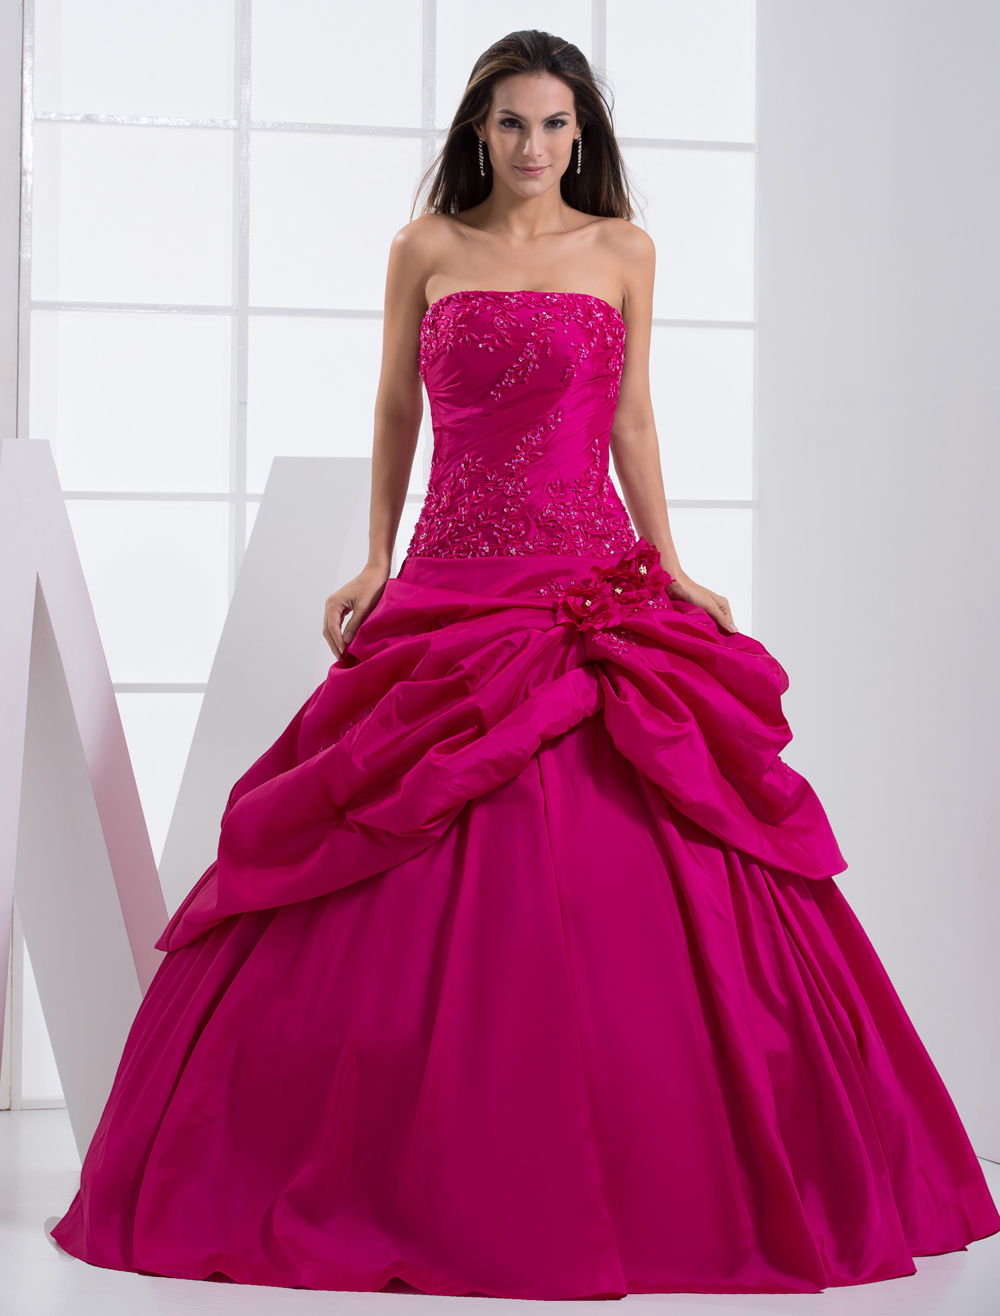 Hot pink Quinceanear Dress Strapless Floor Length Beading Taffeta Ball Gown Party Dress (Wedding Quinceanera Dresses) photo